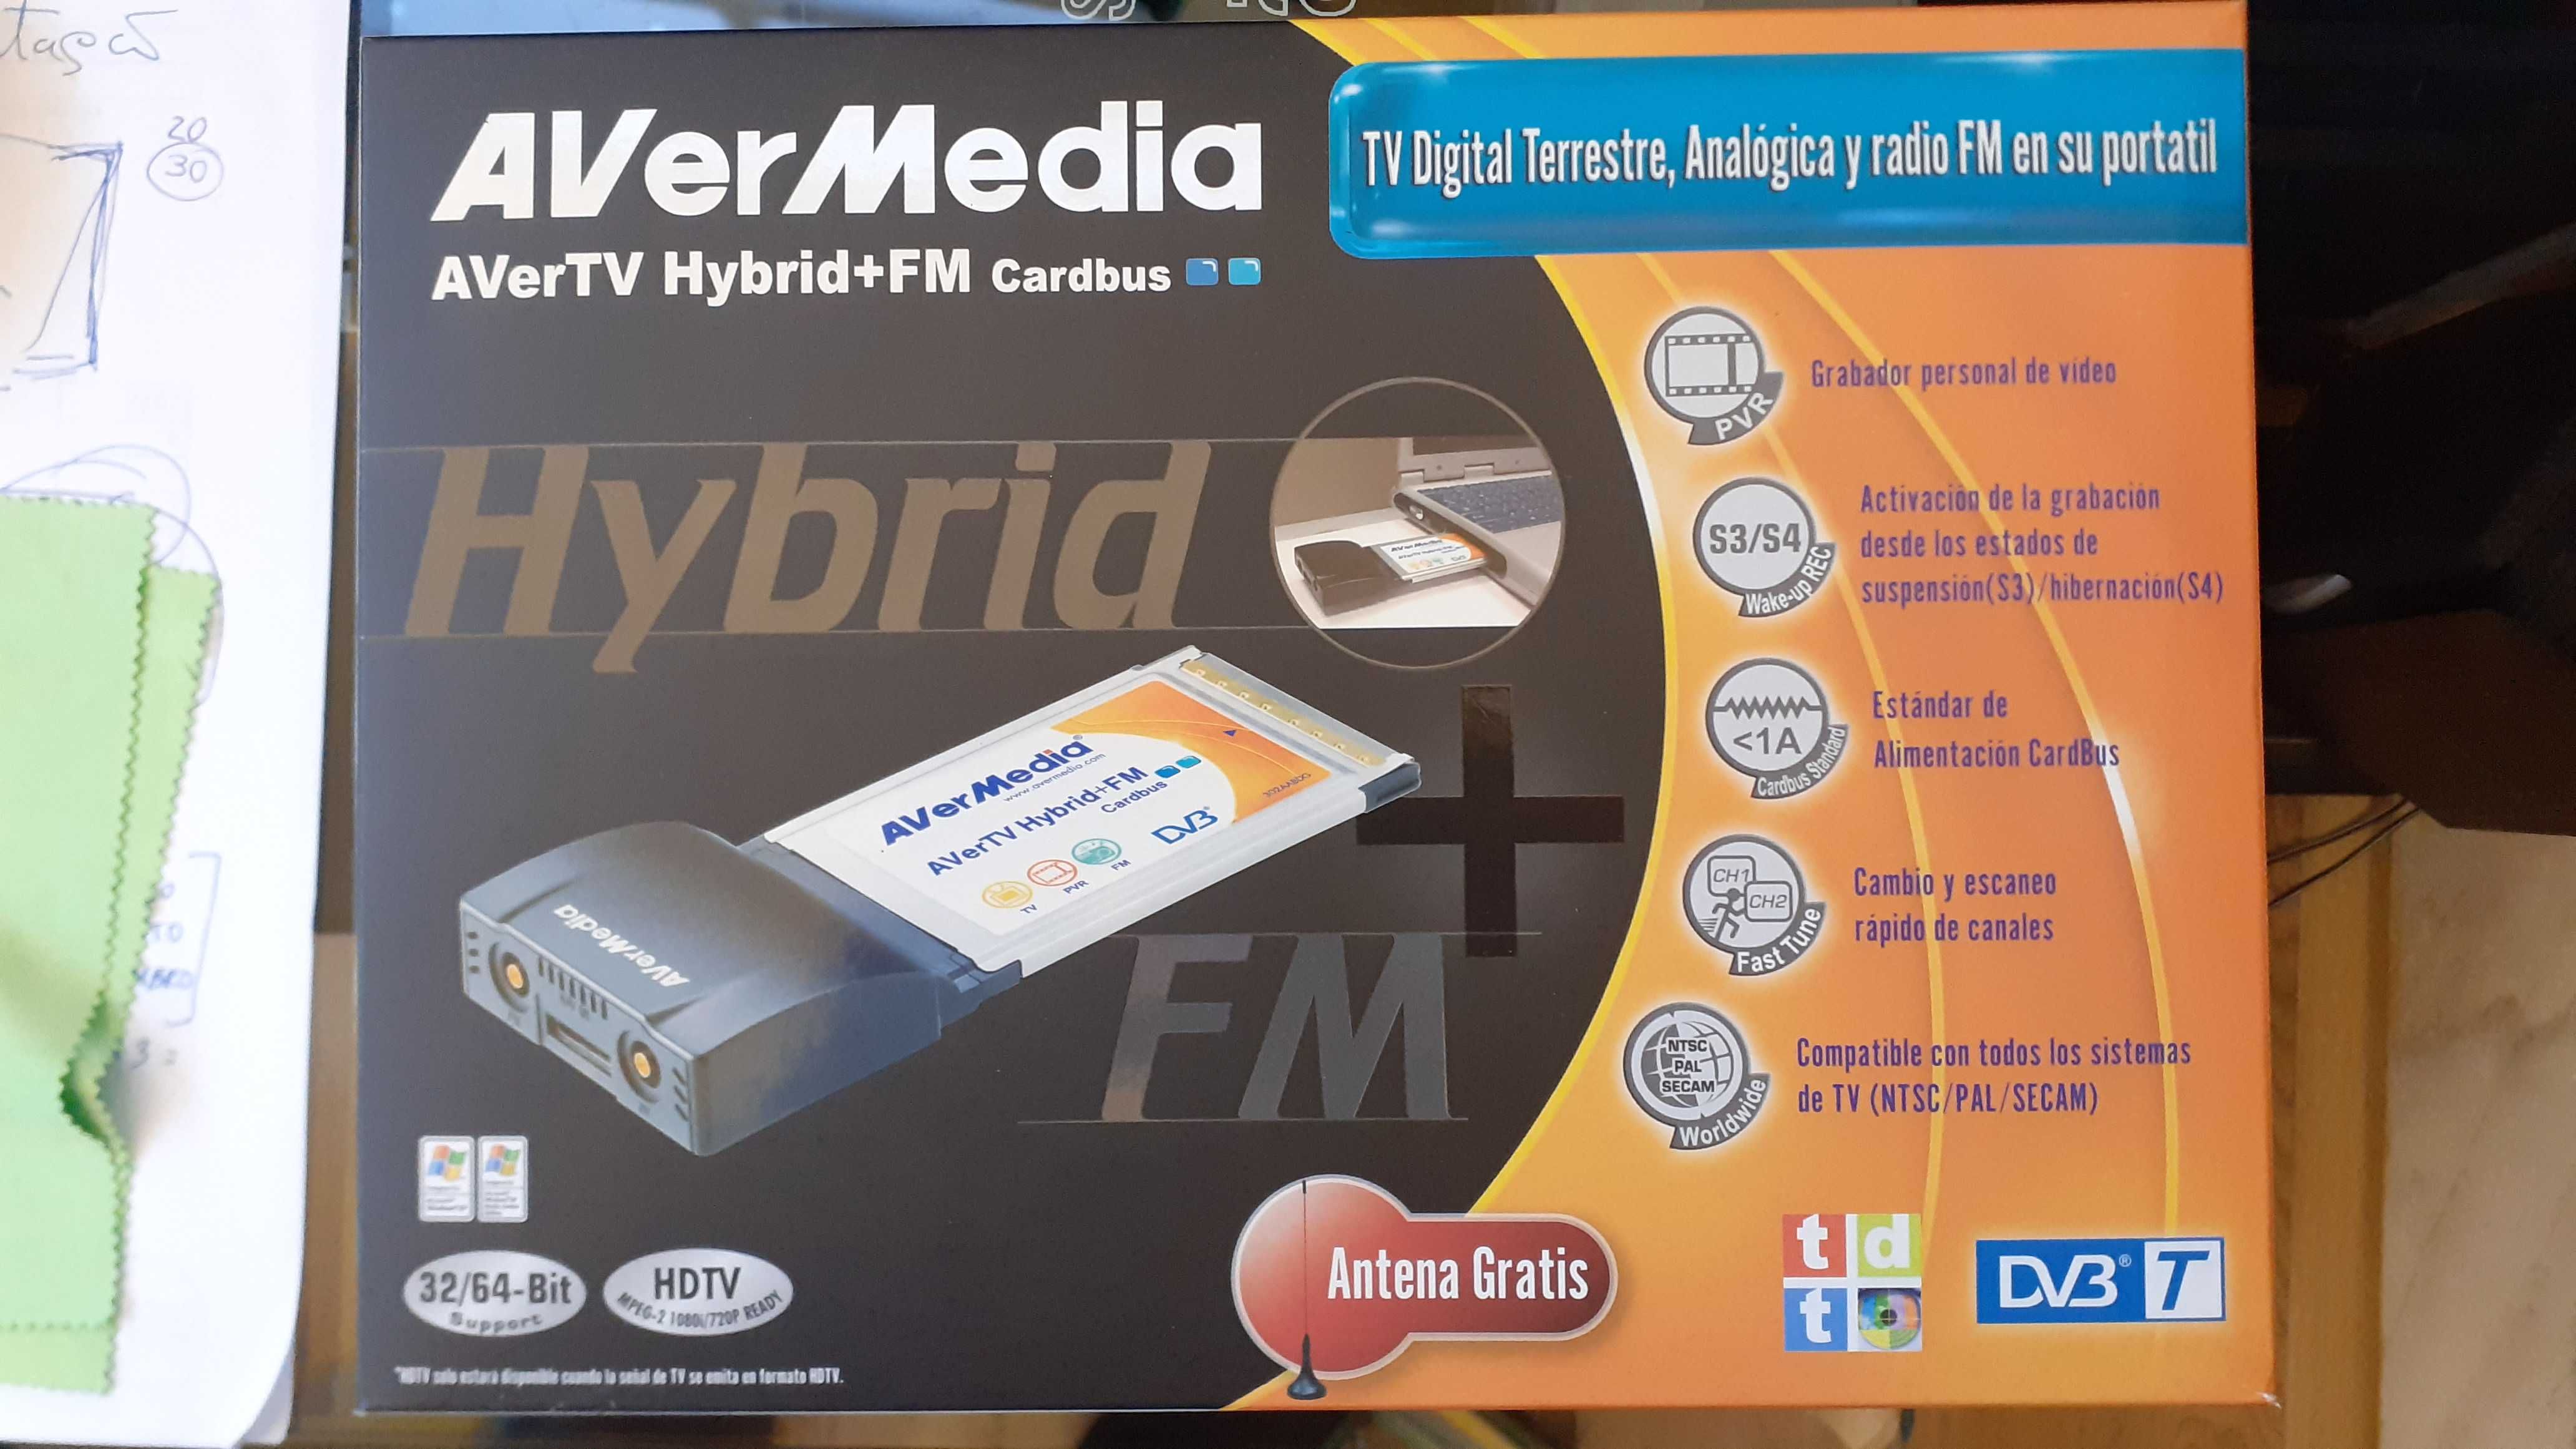 AverTV Hybrid+FM Cardbus